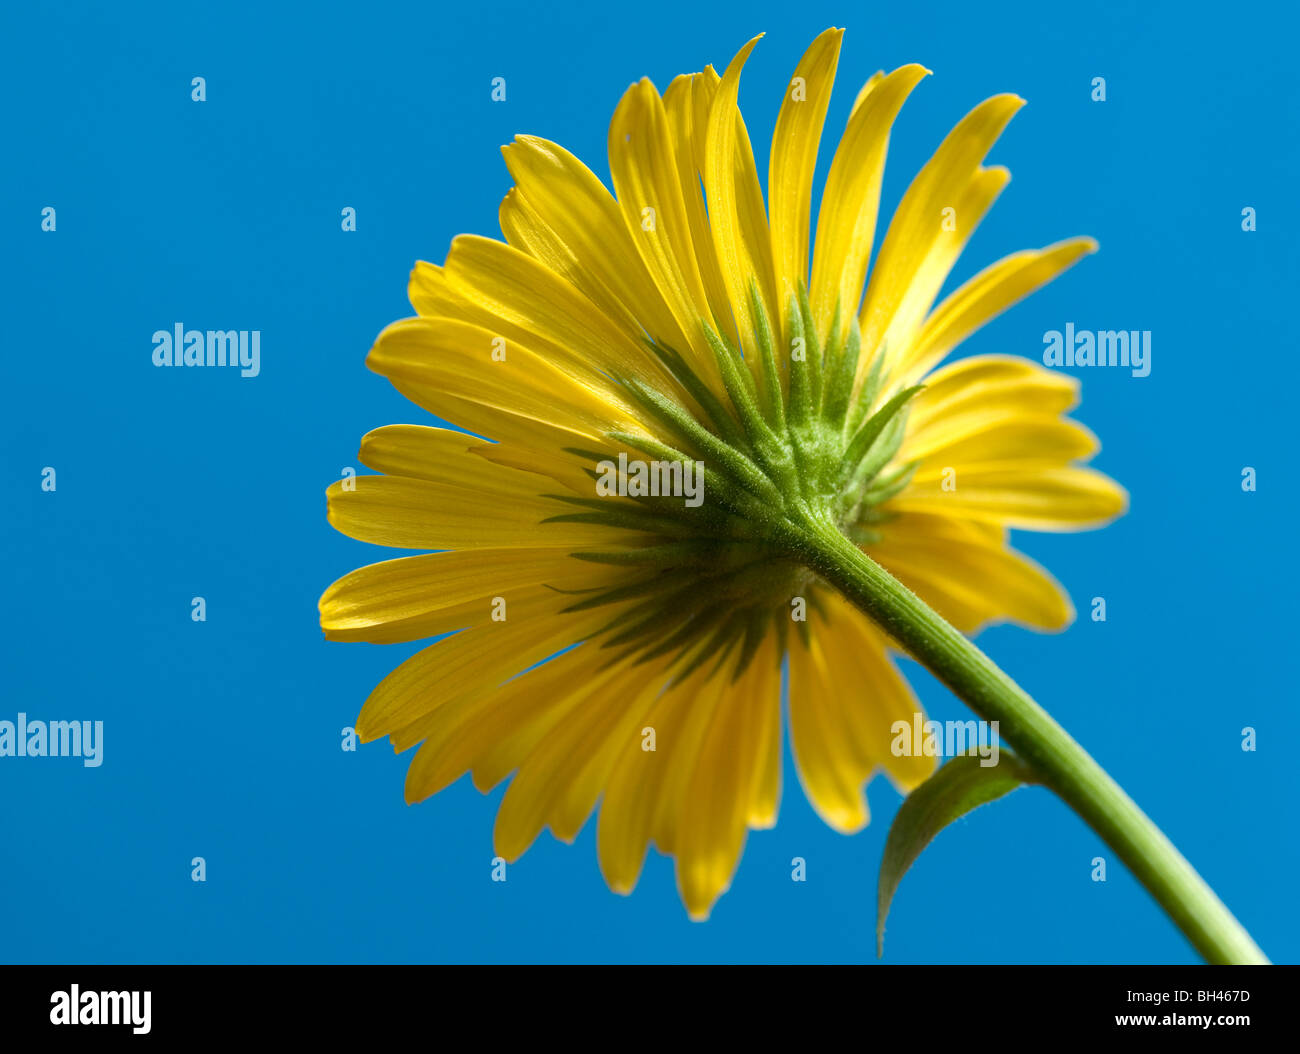 Doronicum flower (Doronicum orientale). Close up portrait of underside of flower against a blue sky. Stock Photo